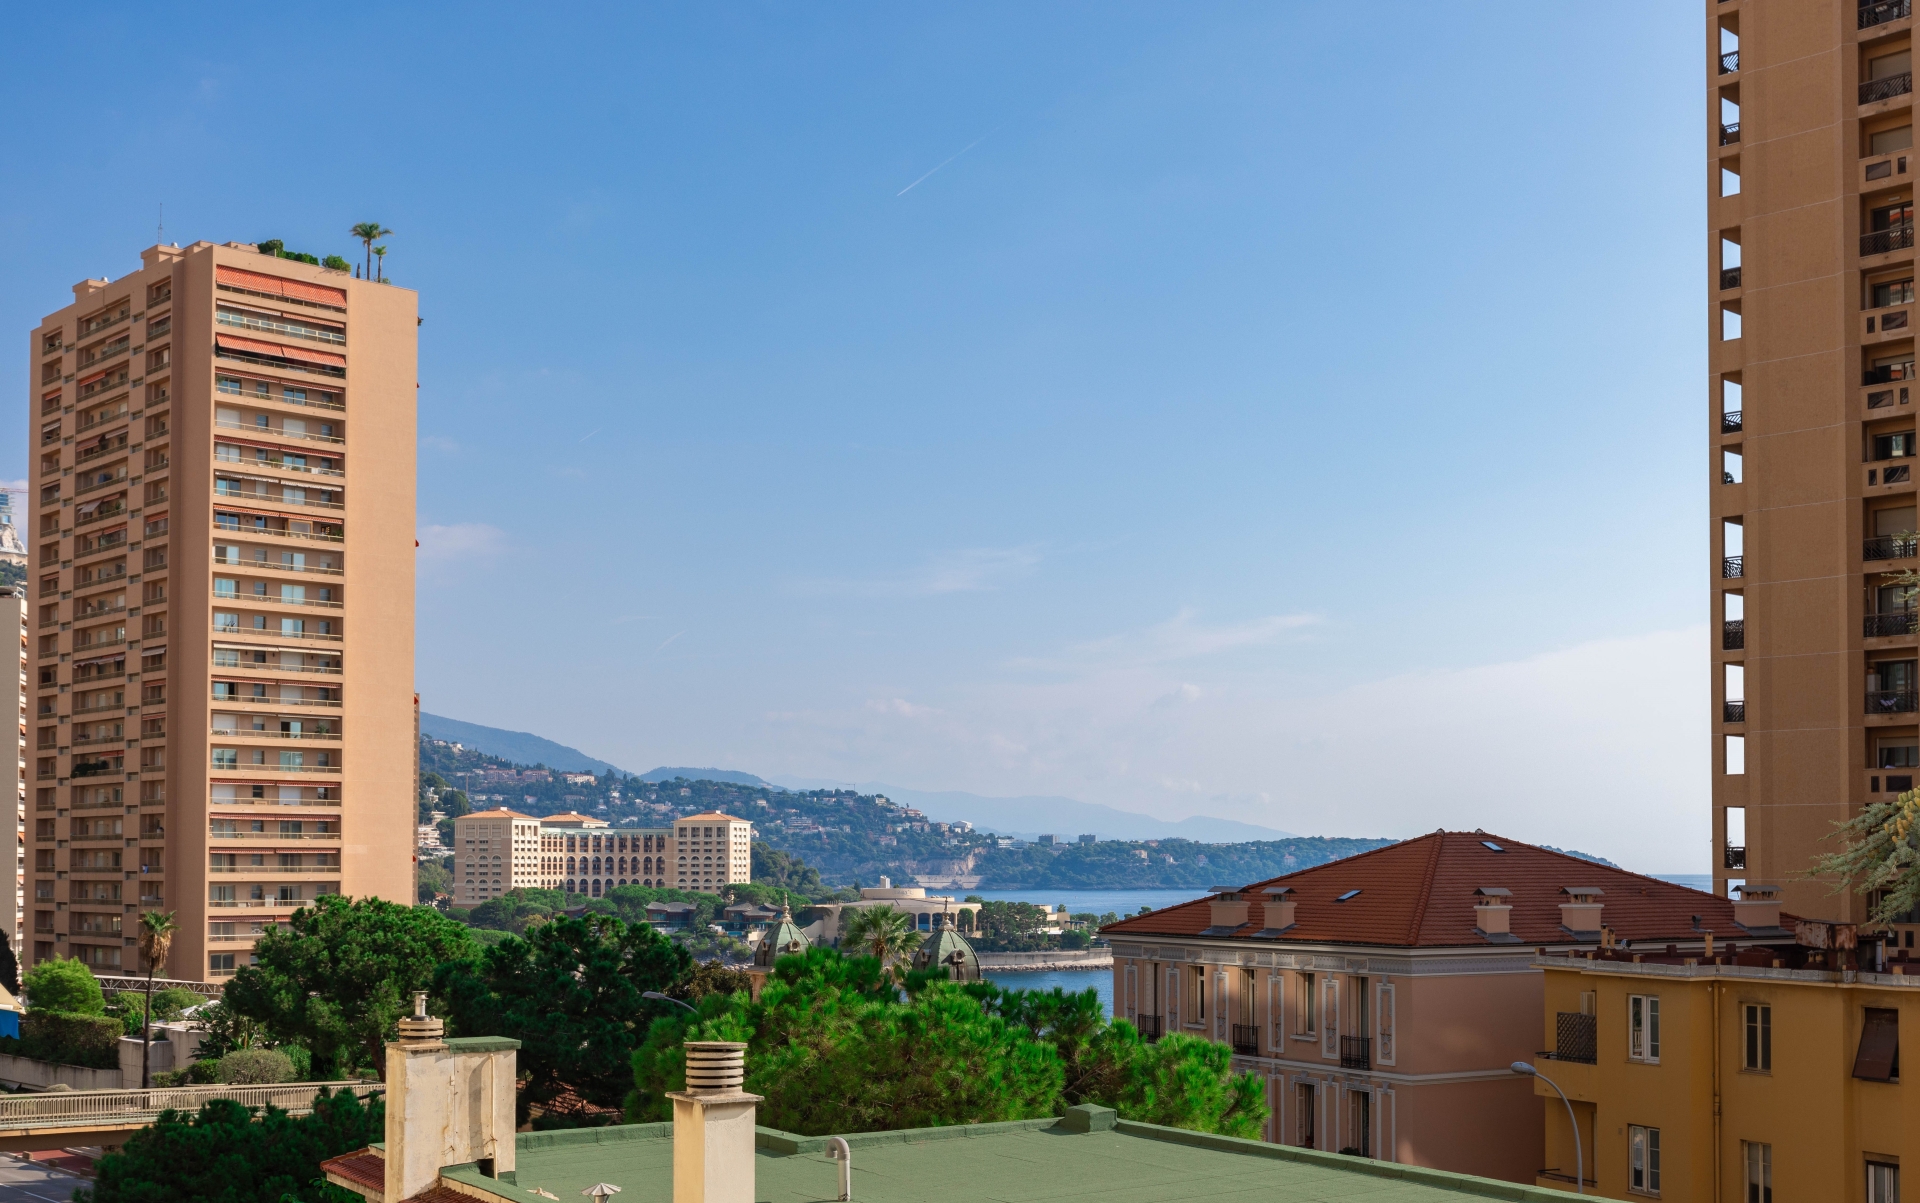 Dotta Appartement de 4 pieces a vendre - PALAIS SIJEAN - Monte-Carlo - Monaco - imgjeremyjakubo074a3008